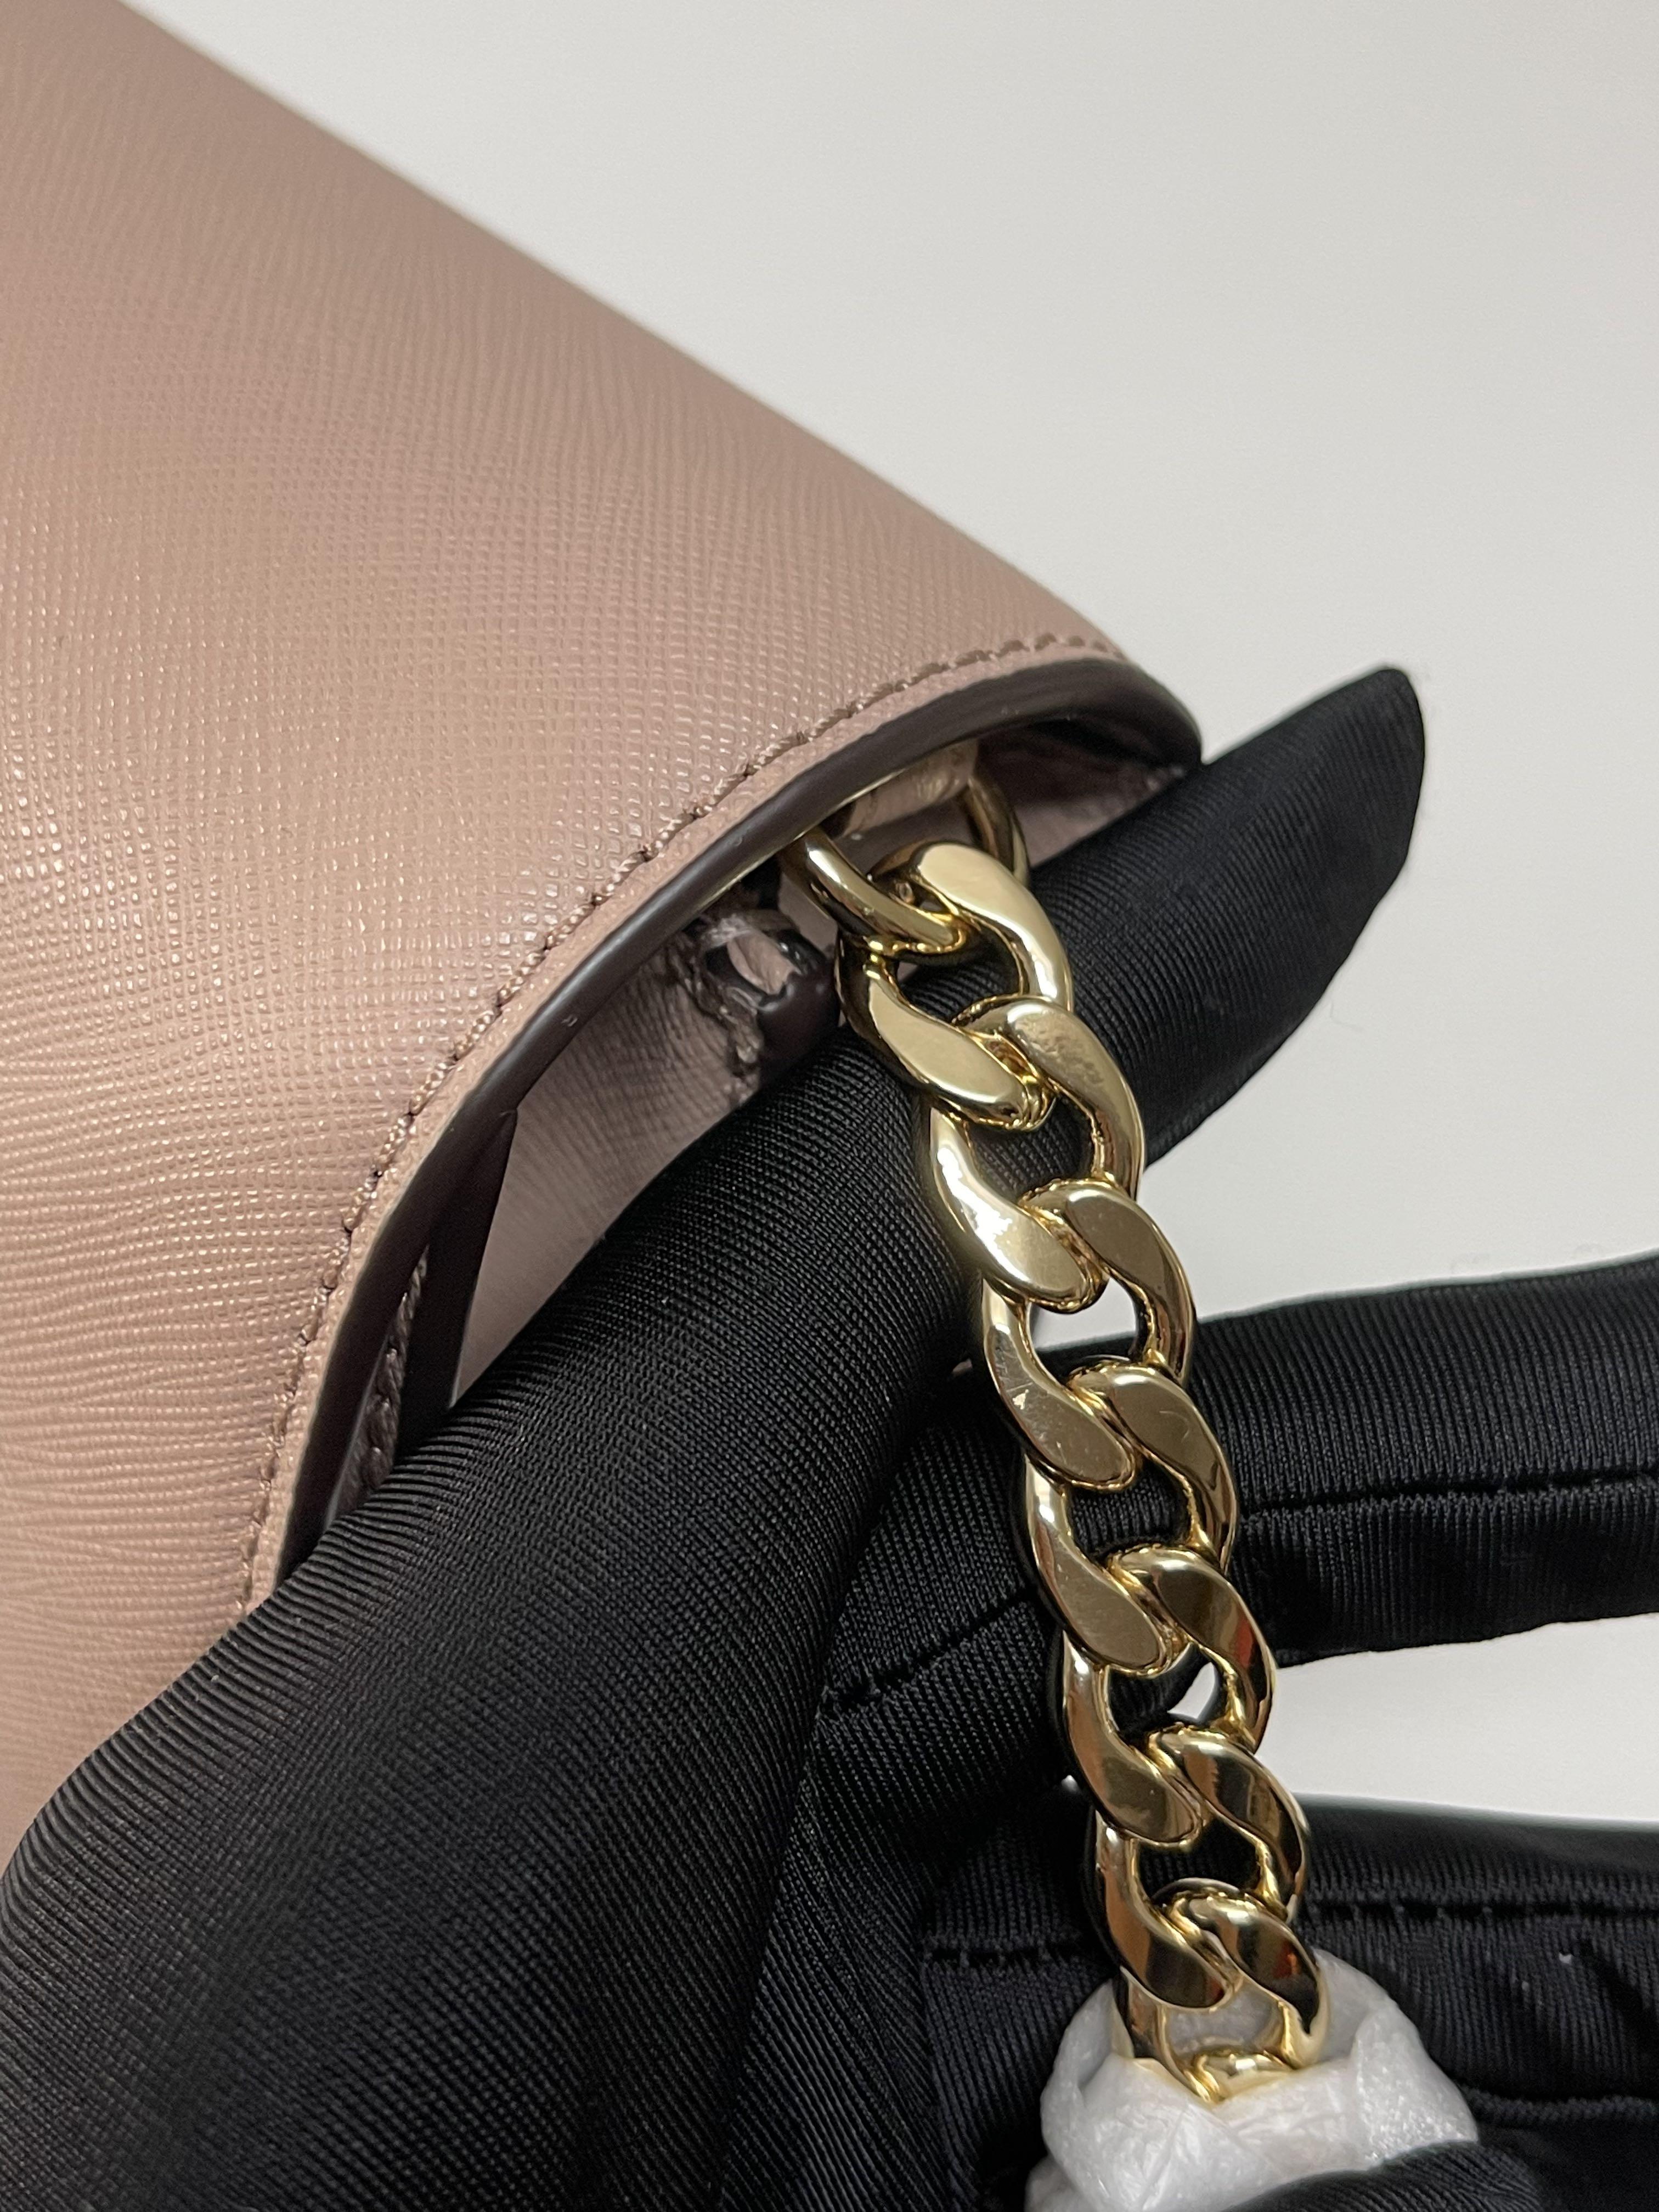 MICHAEL KORS Daniela Large Saffiano Leather Crossbody Bag Color FAWN 